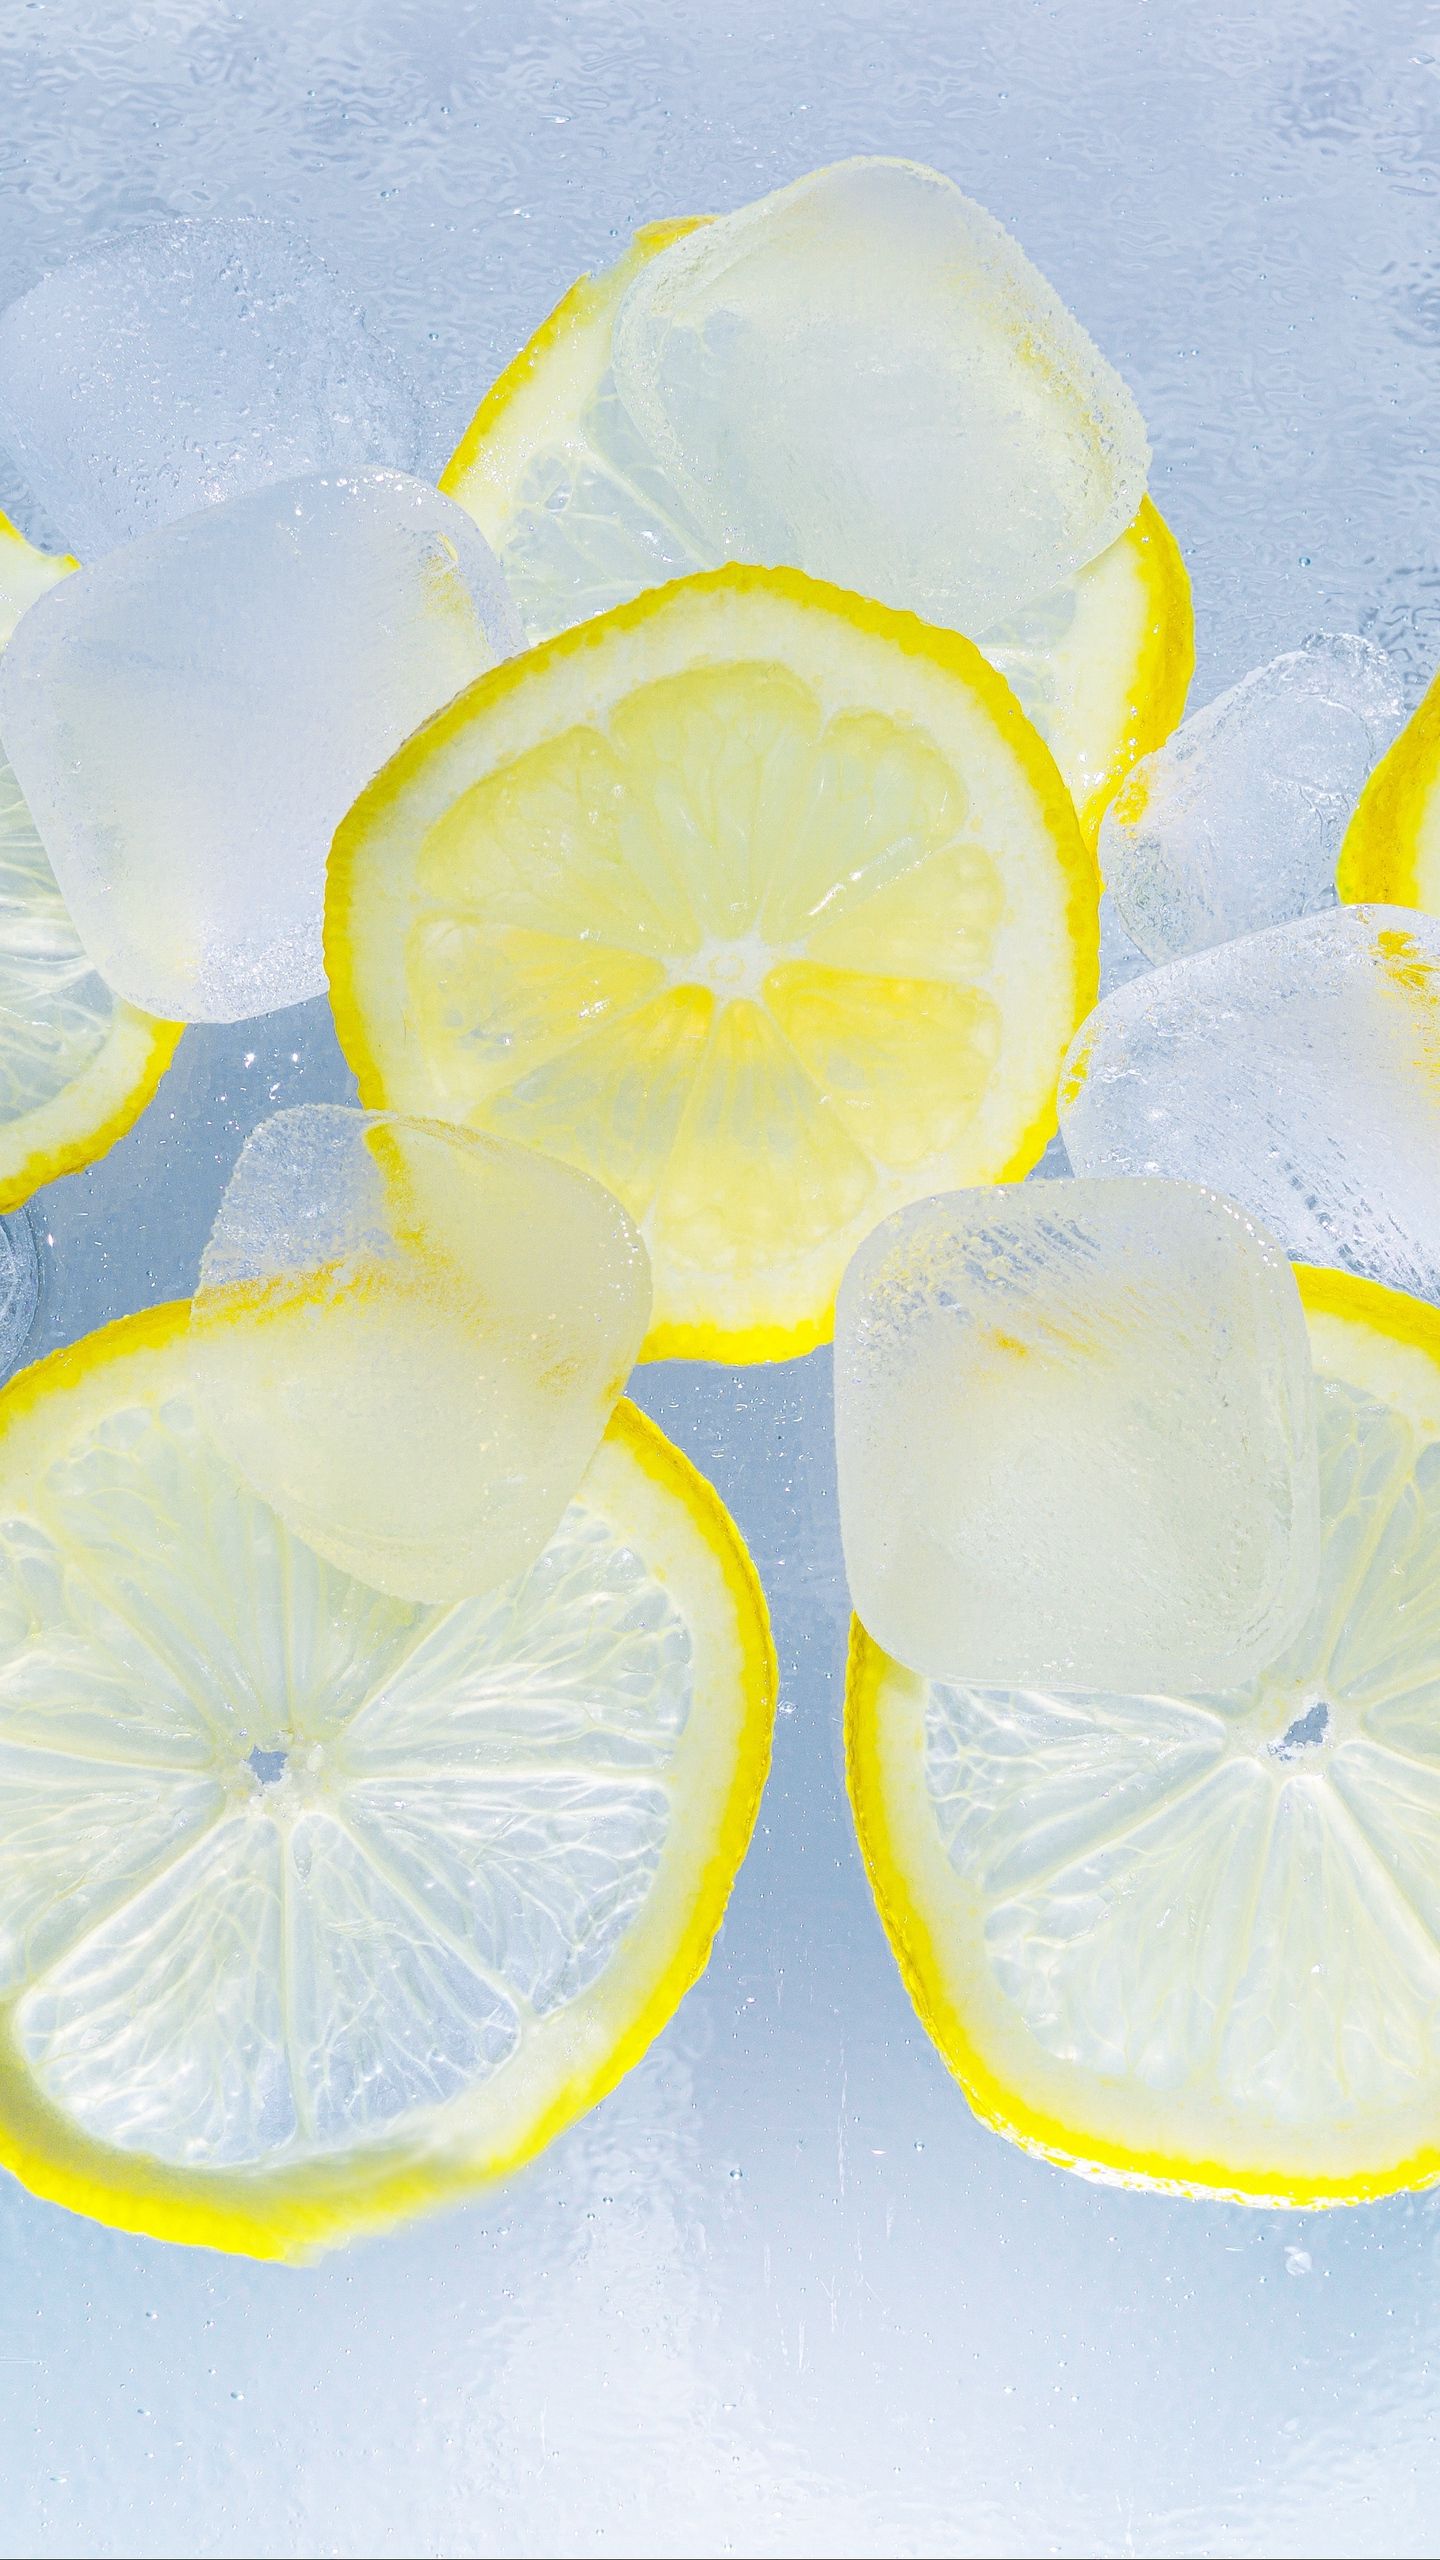 Lemon pickle Wallpaper Download